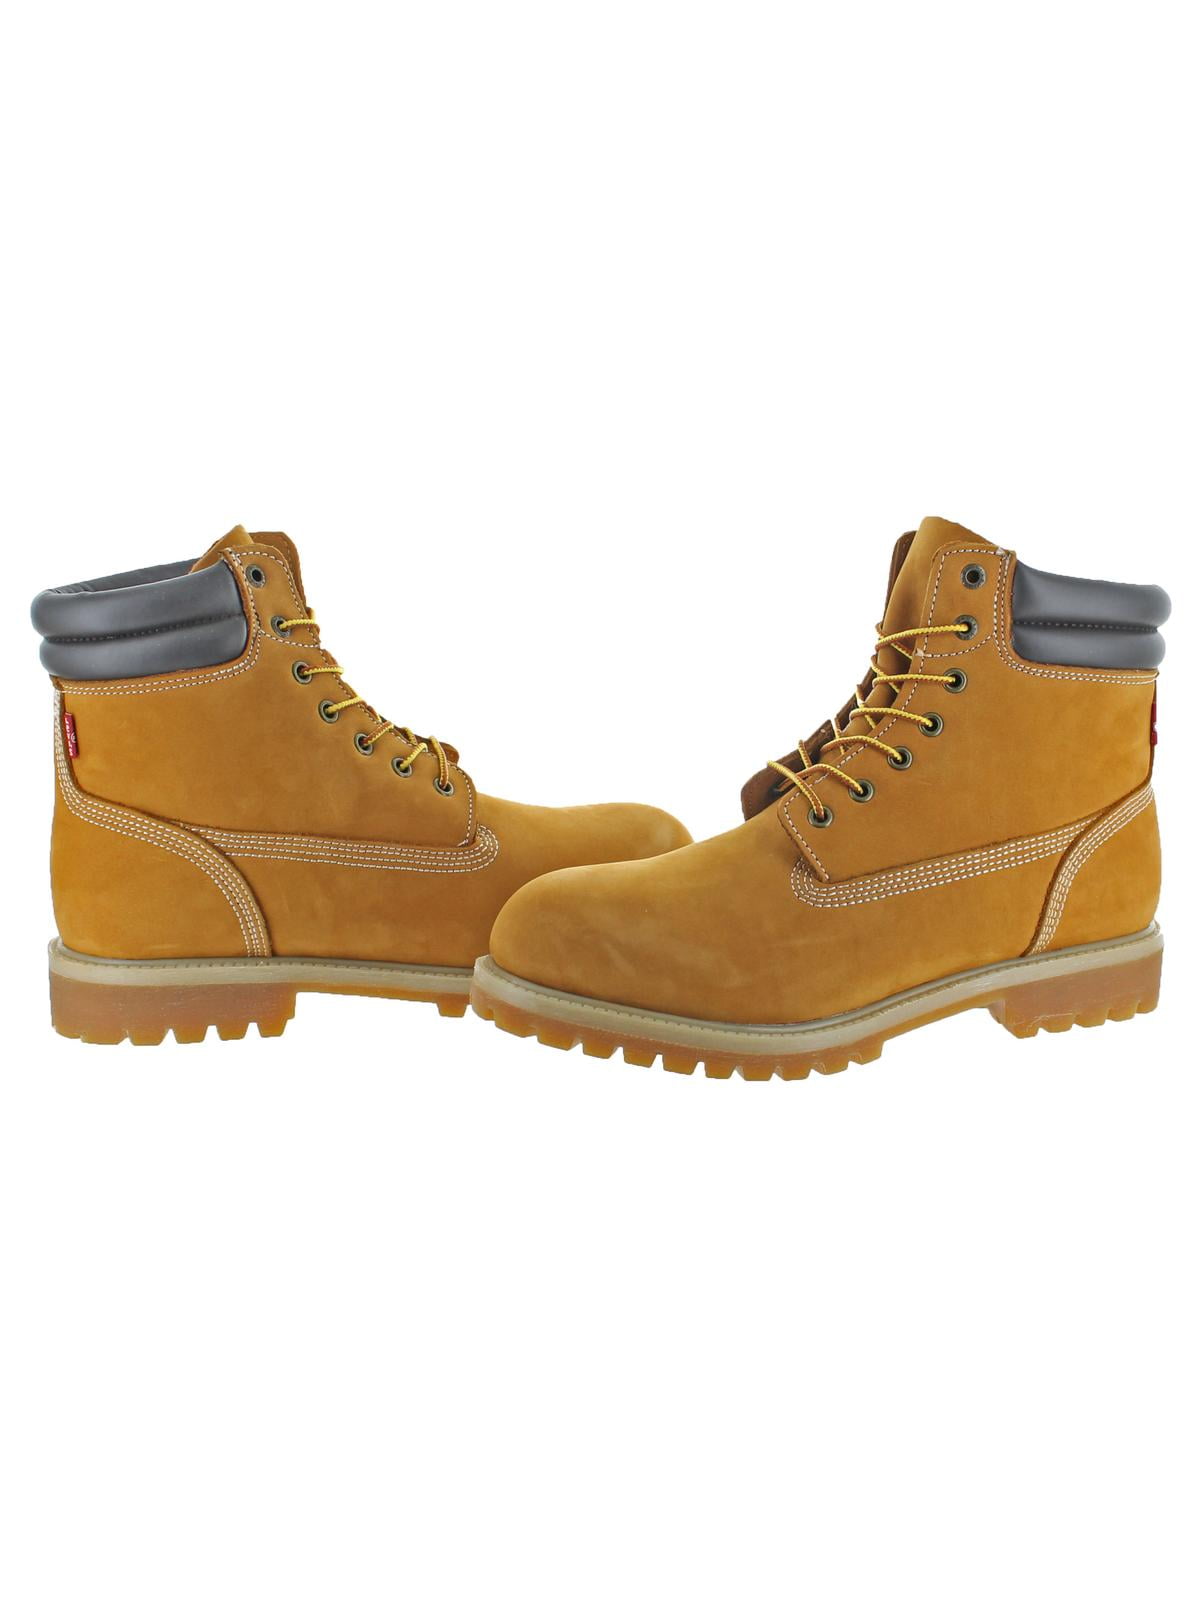 Levi's Harrison R Men's Nubuck Water Resistant Fashion Boots Tan Size 10 -  